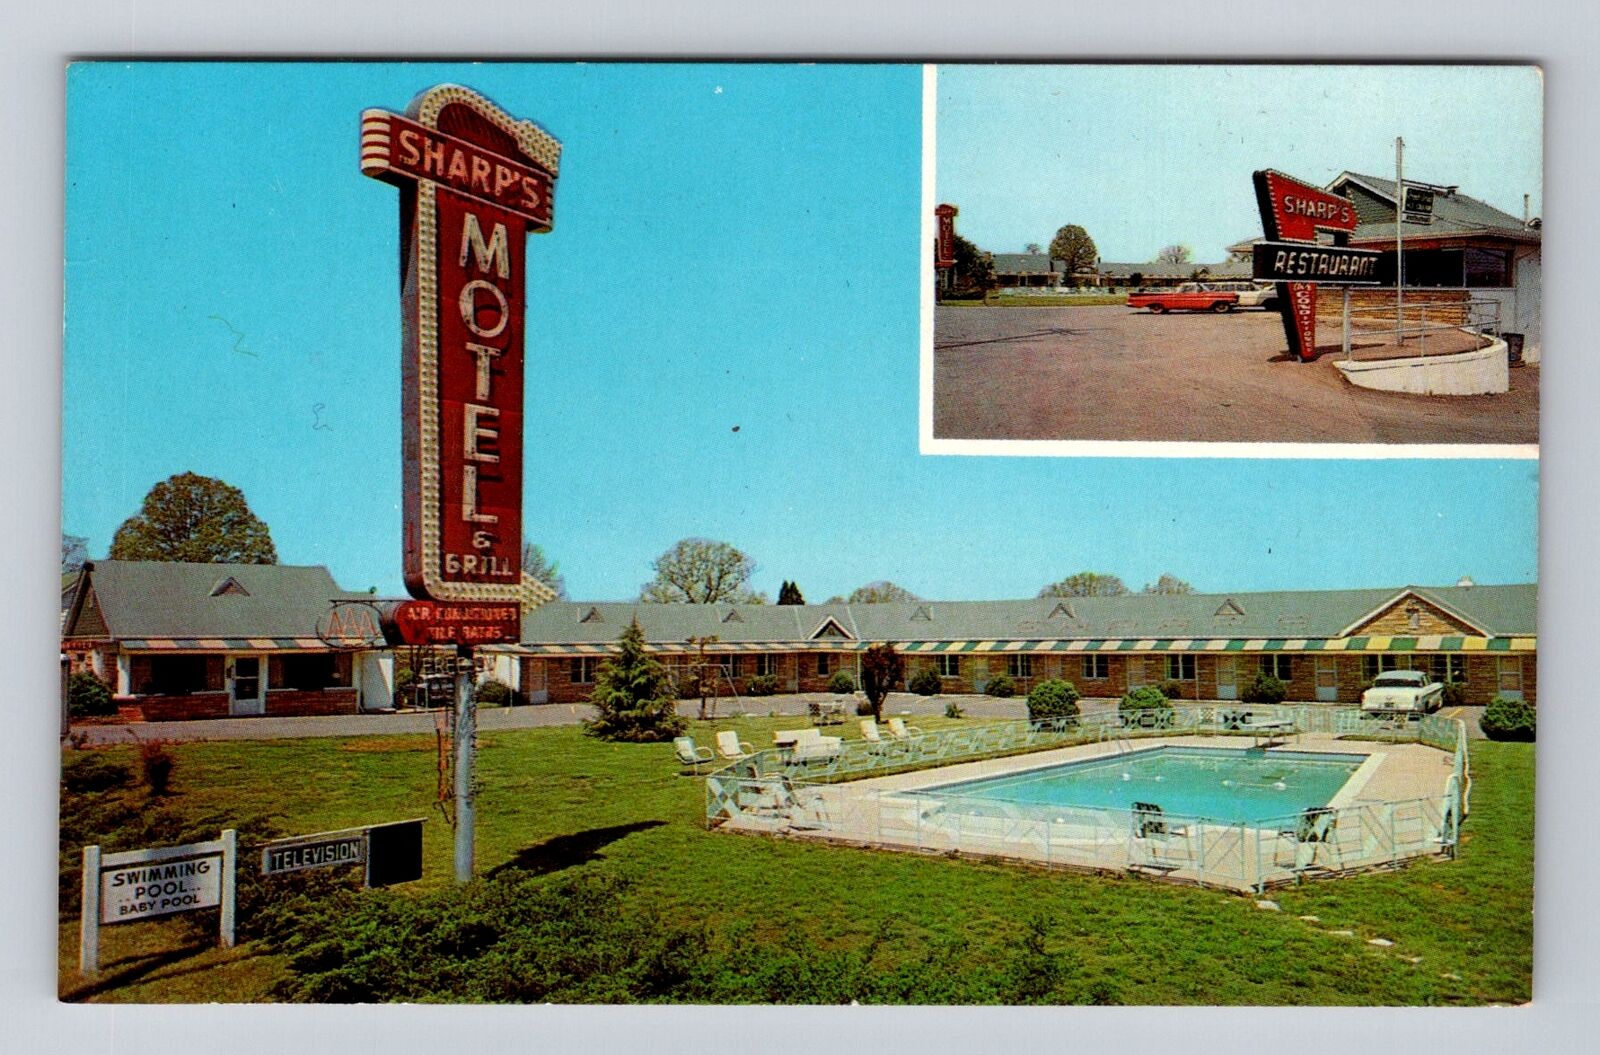 Knoxville TN-Tennessee, Sharp's Motel Advertising, Vintage Souvenir Postcard